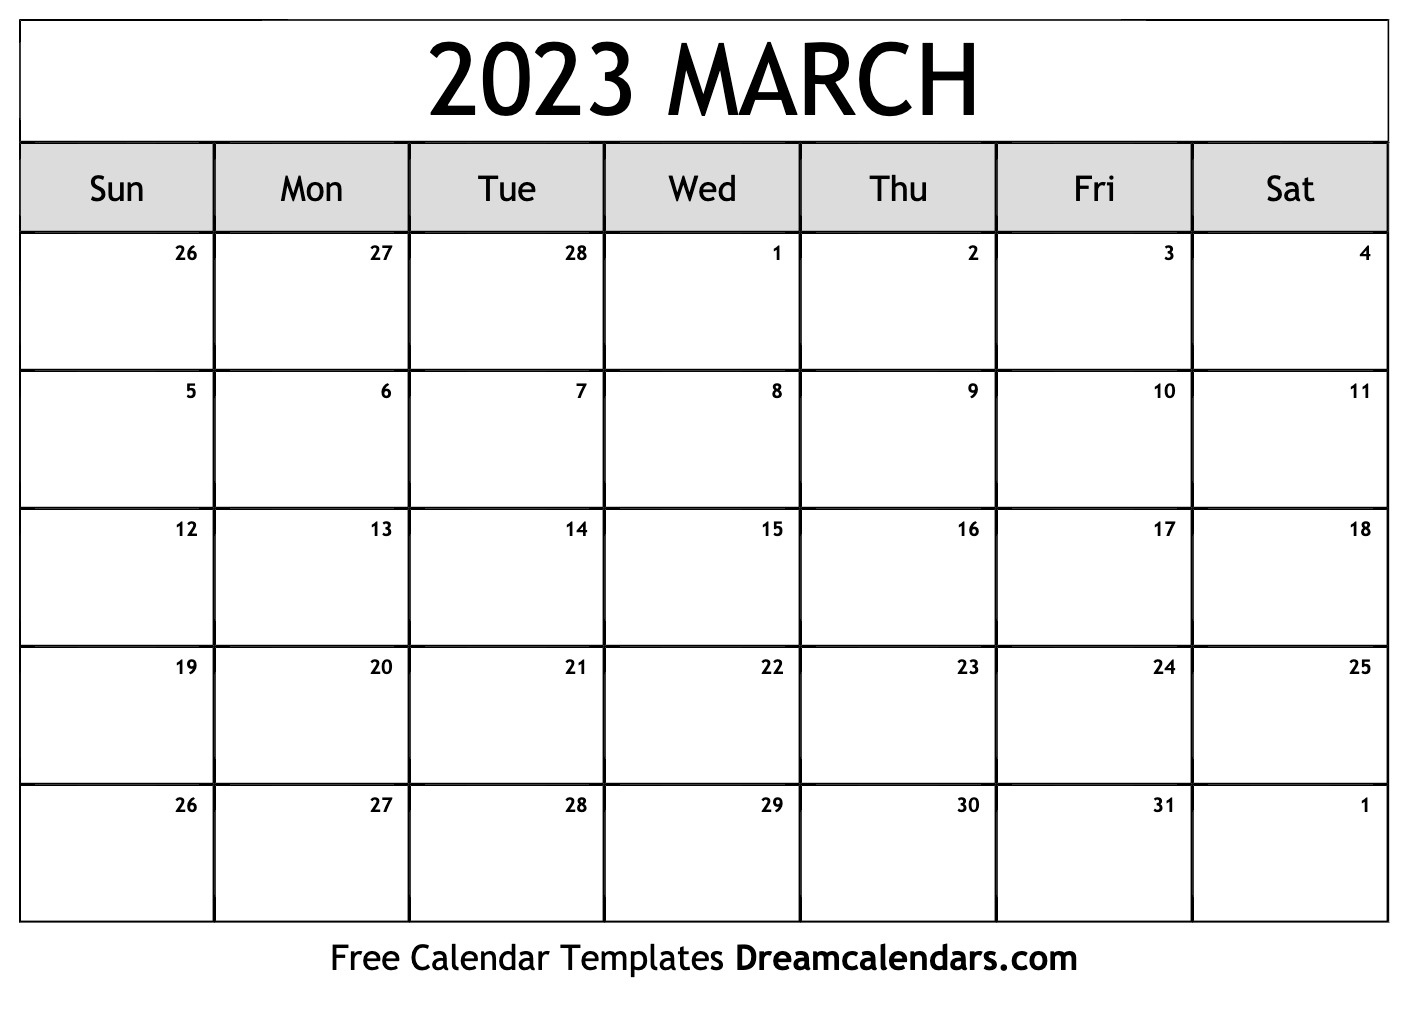 March 2023 calendar free blank printable templates